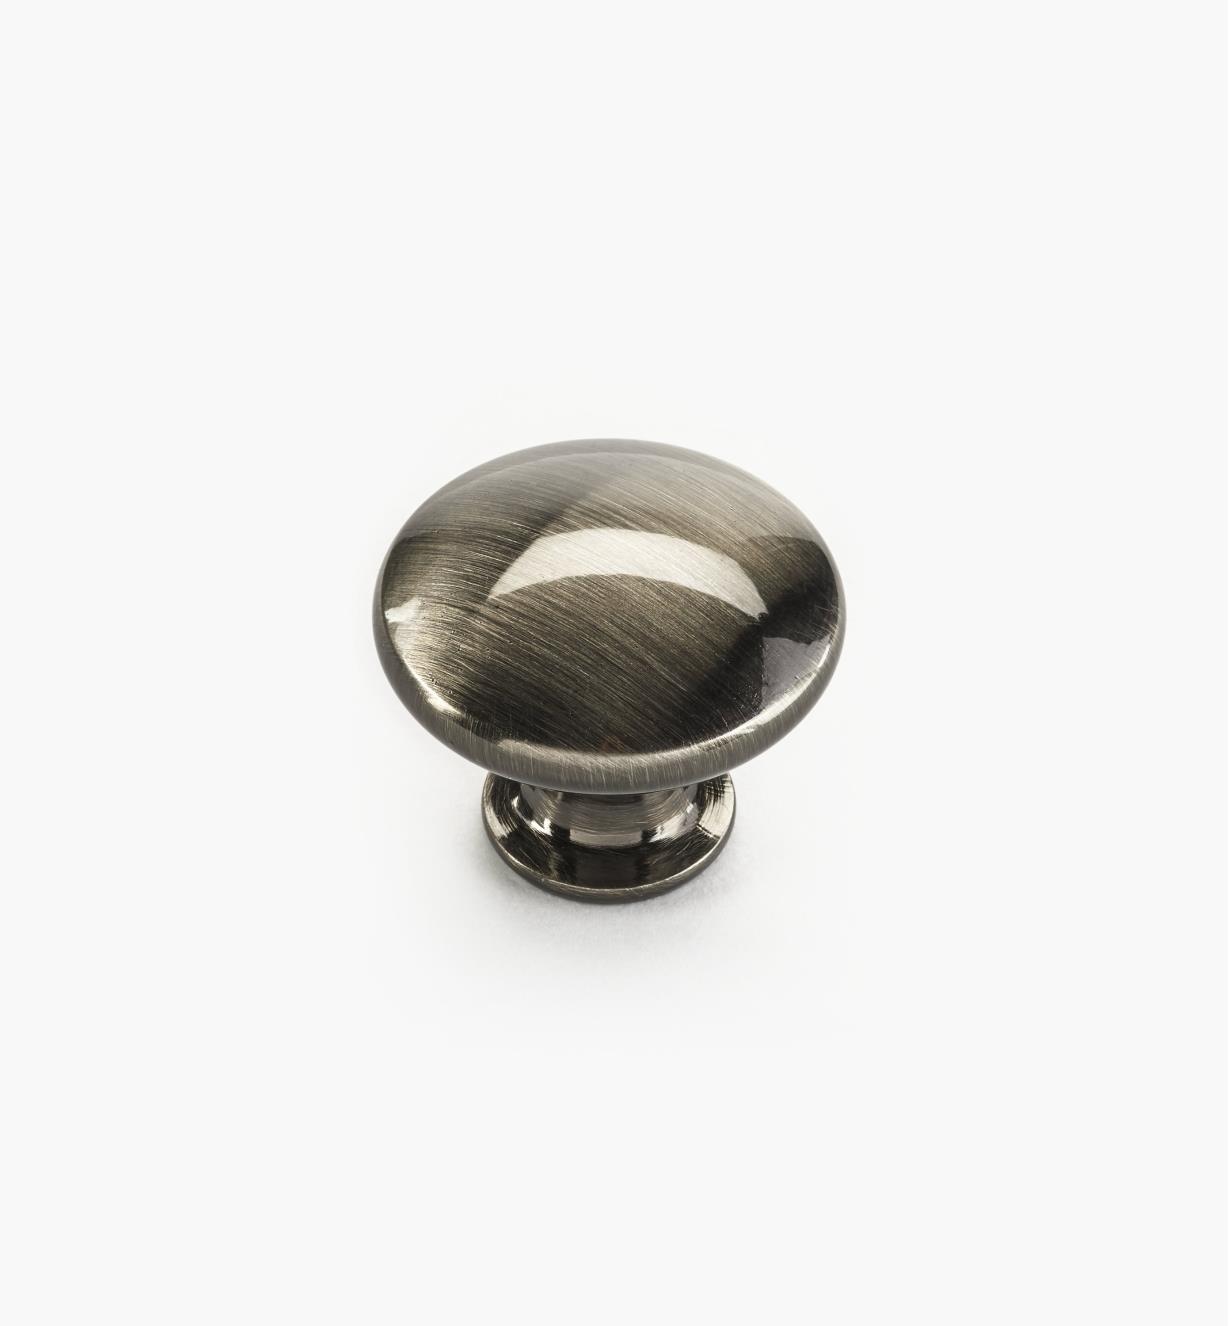 02W4365 - 1" x 3/4" Brushed Black Nickel Knob